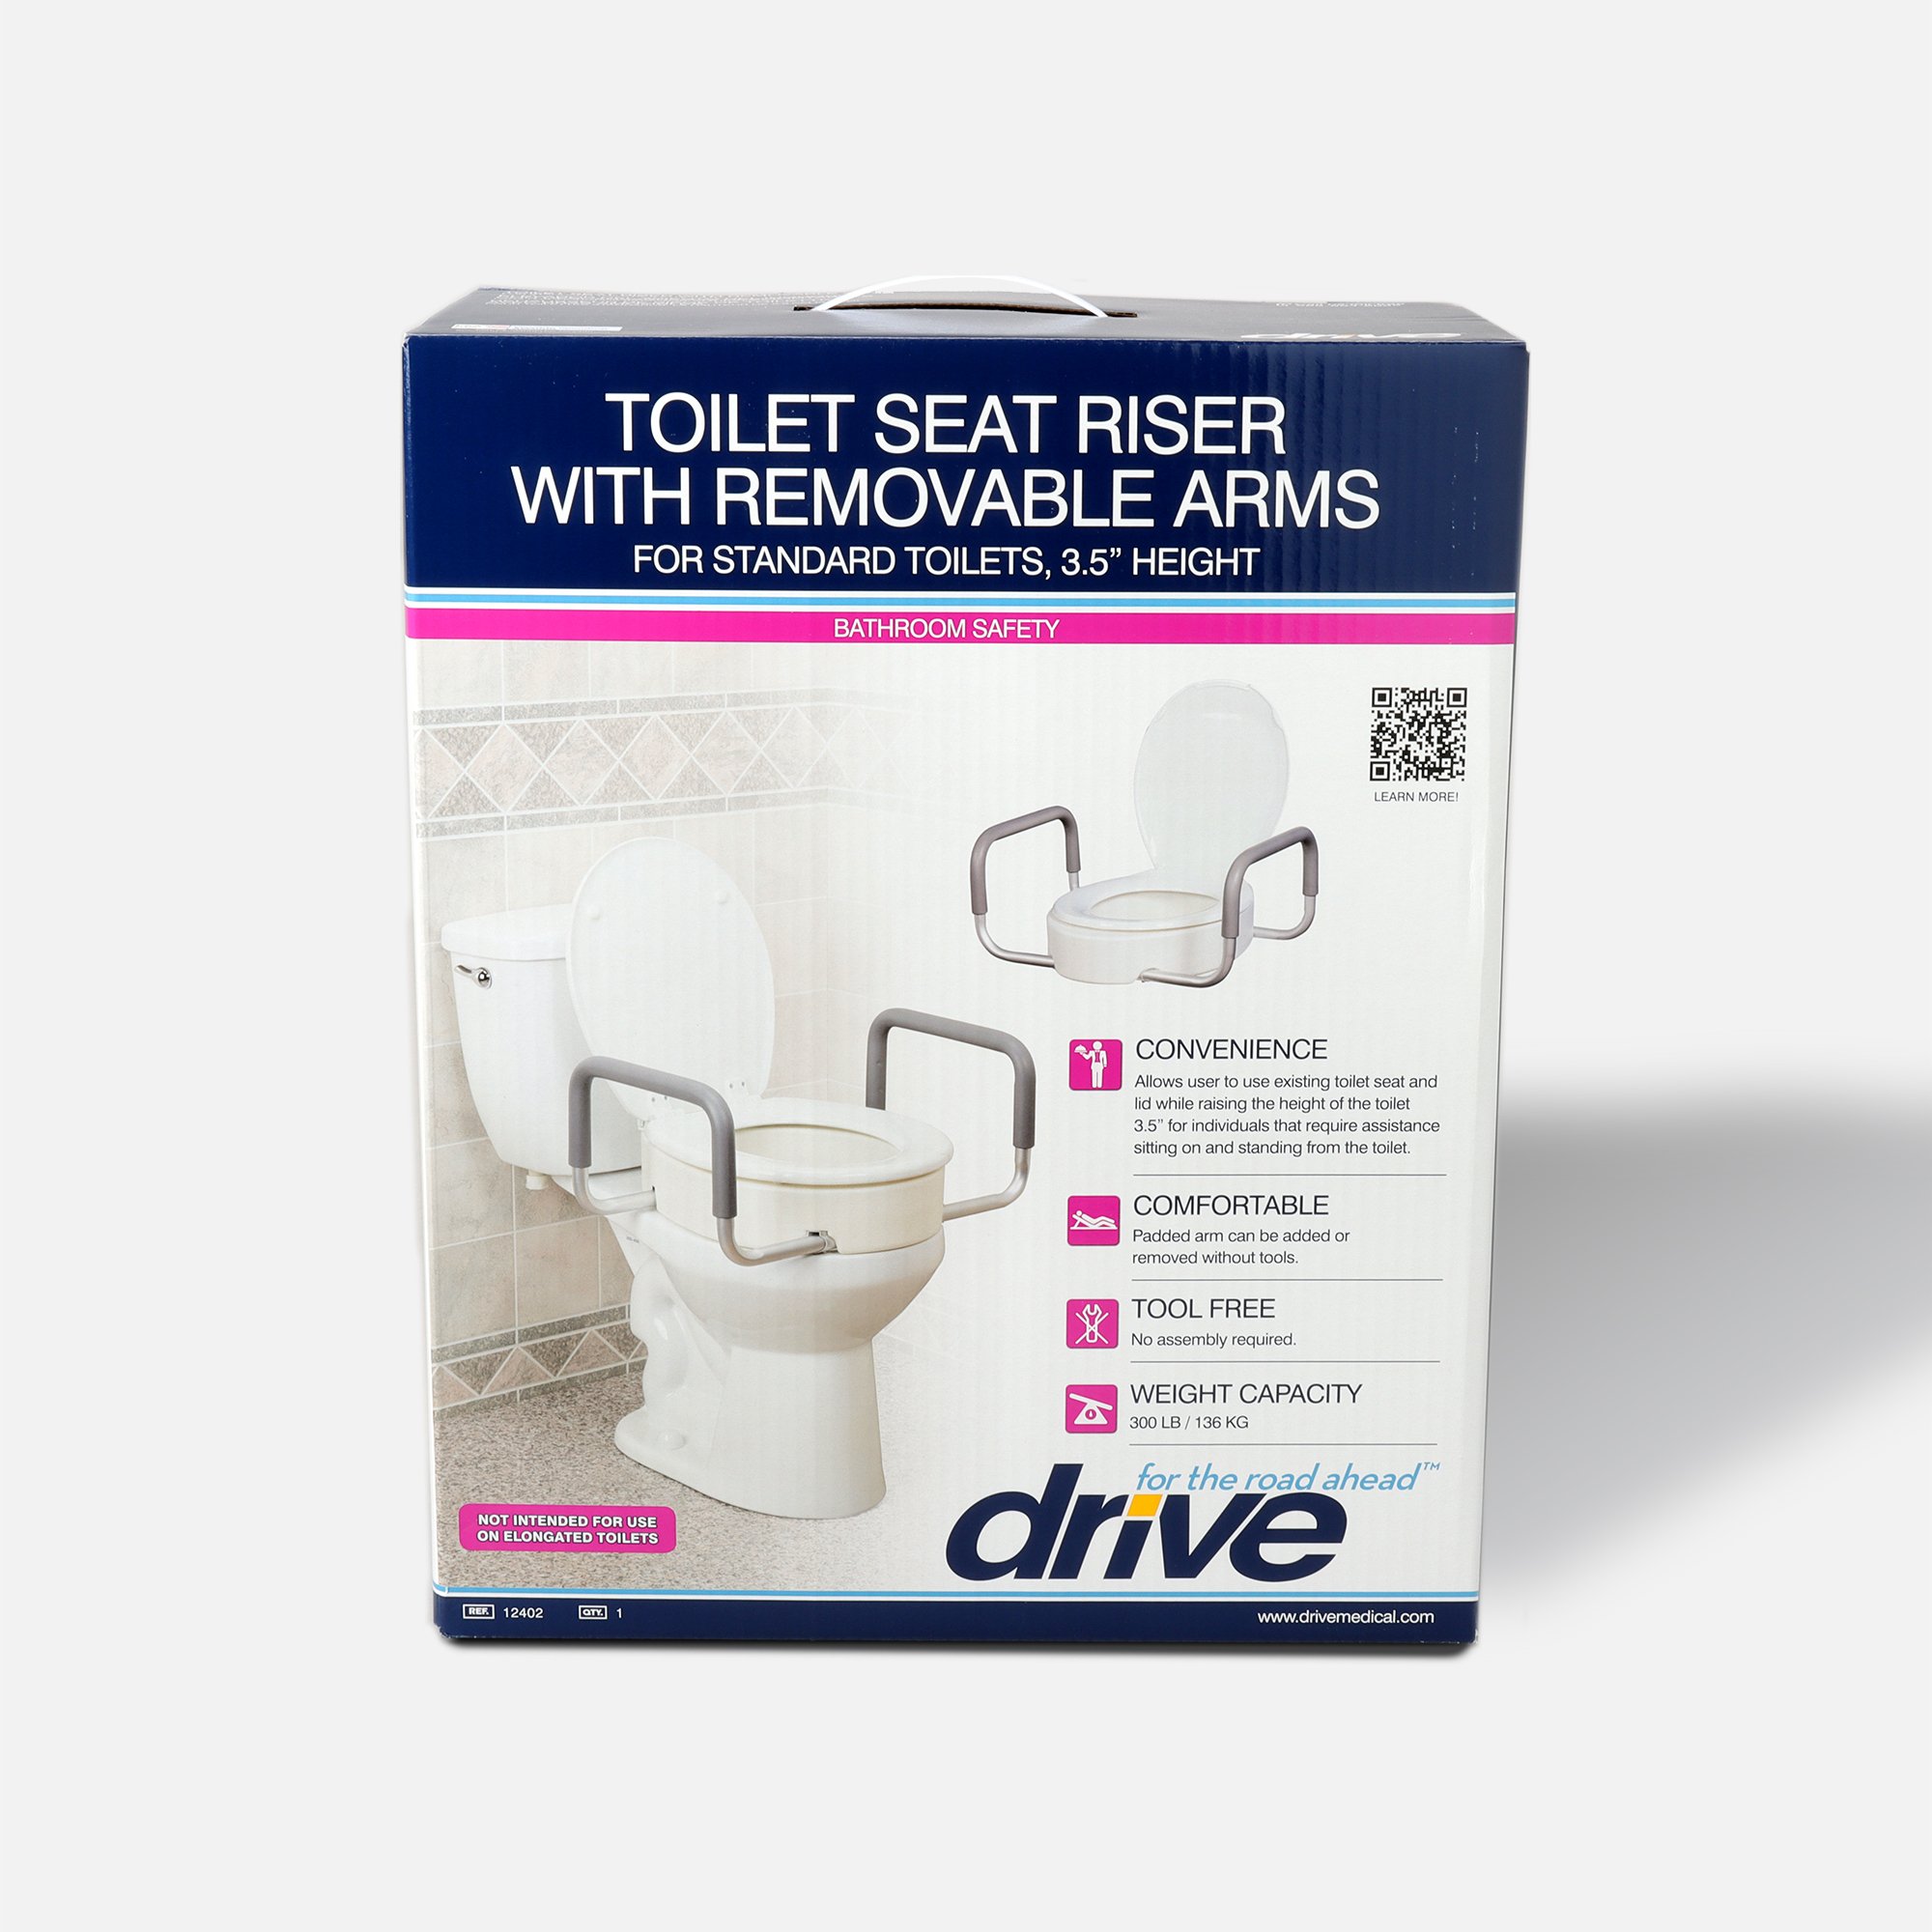 https://fsastore.com/on/demandware.static/-/Sites-hec-master/default/dw92df435f/images/large/drive-medical-toilet-seat-riser-with-removable-arms-17705-1.jpg